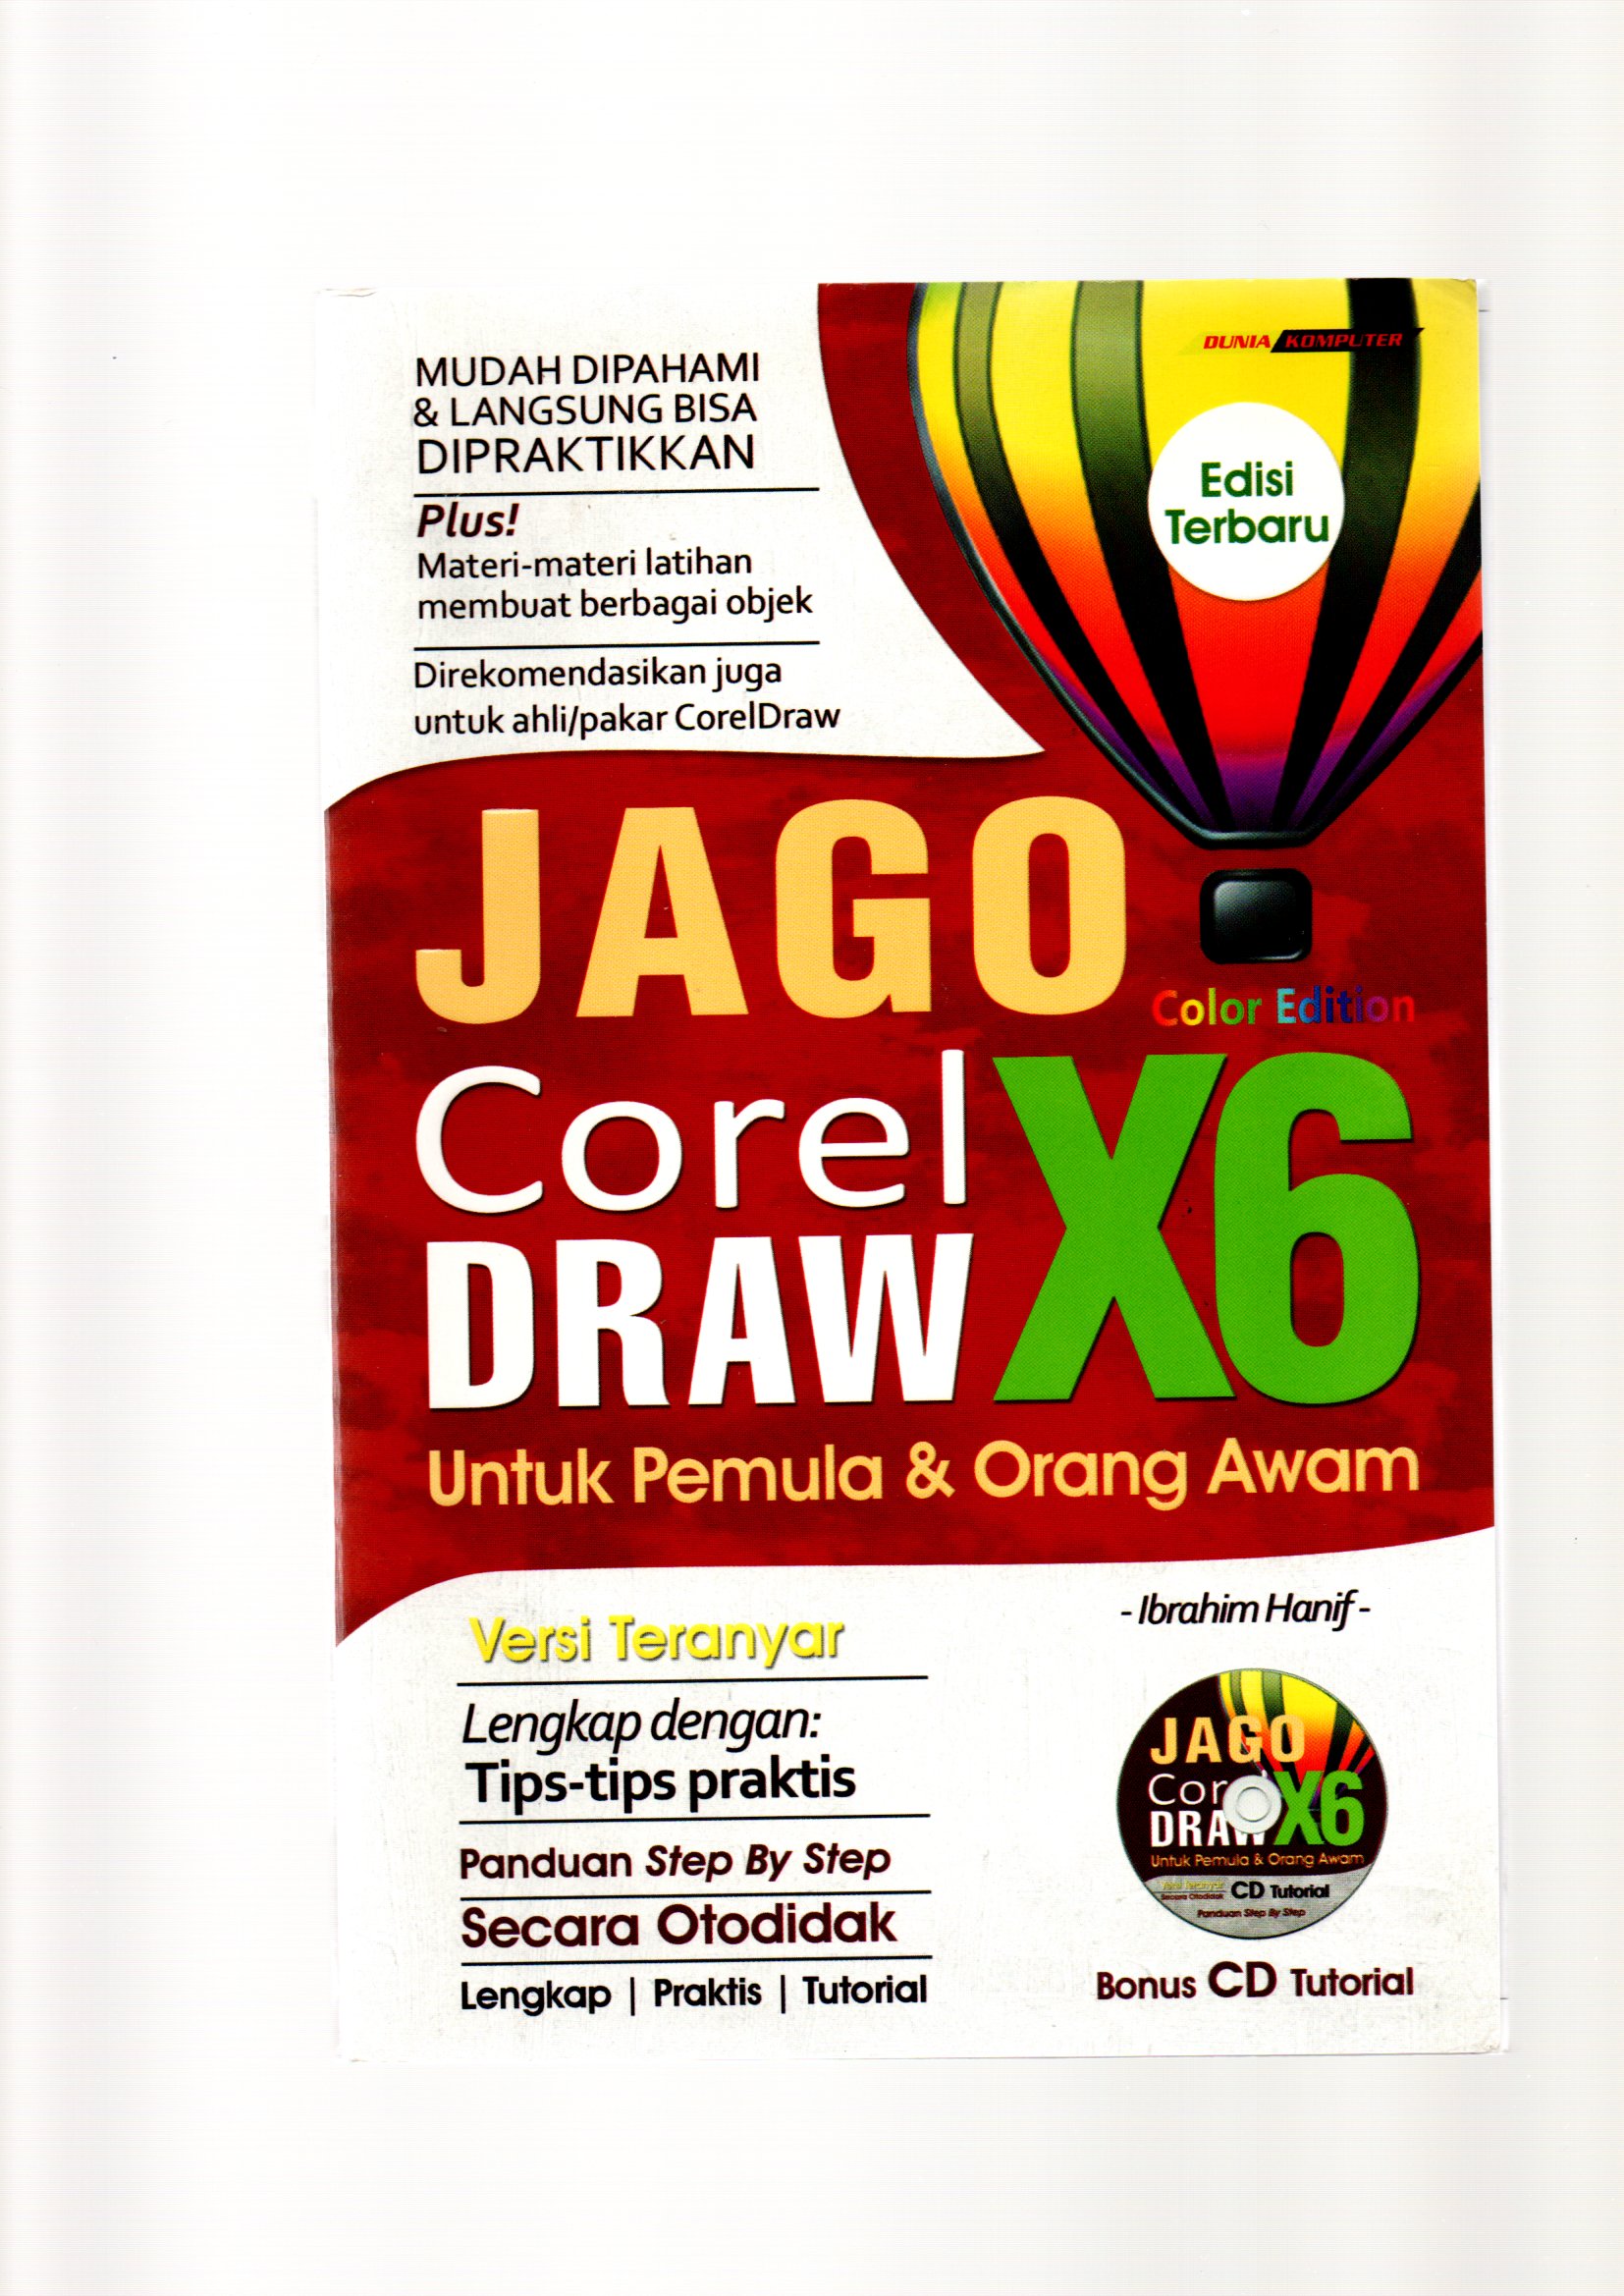 Jago corel draw x6